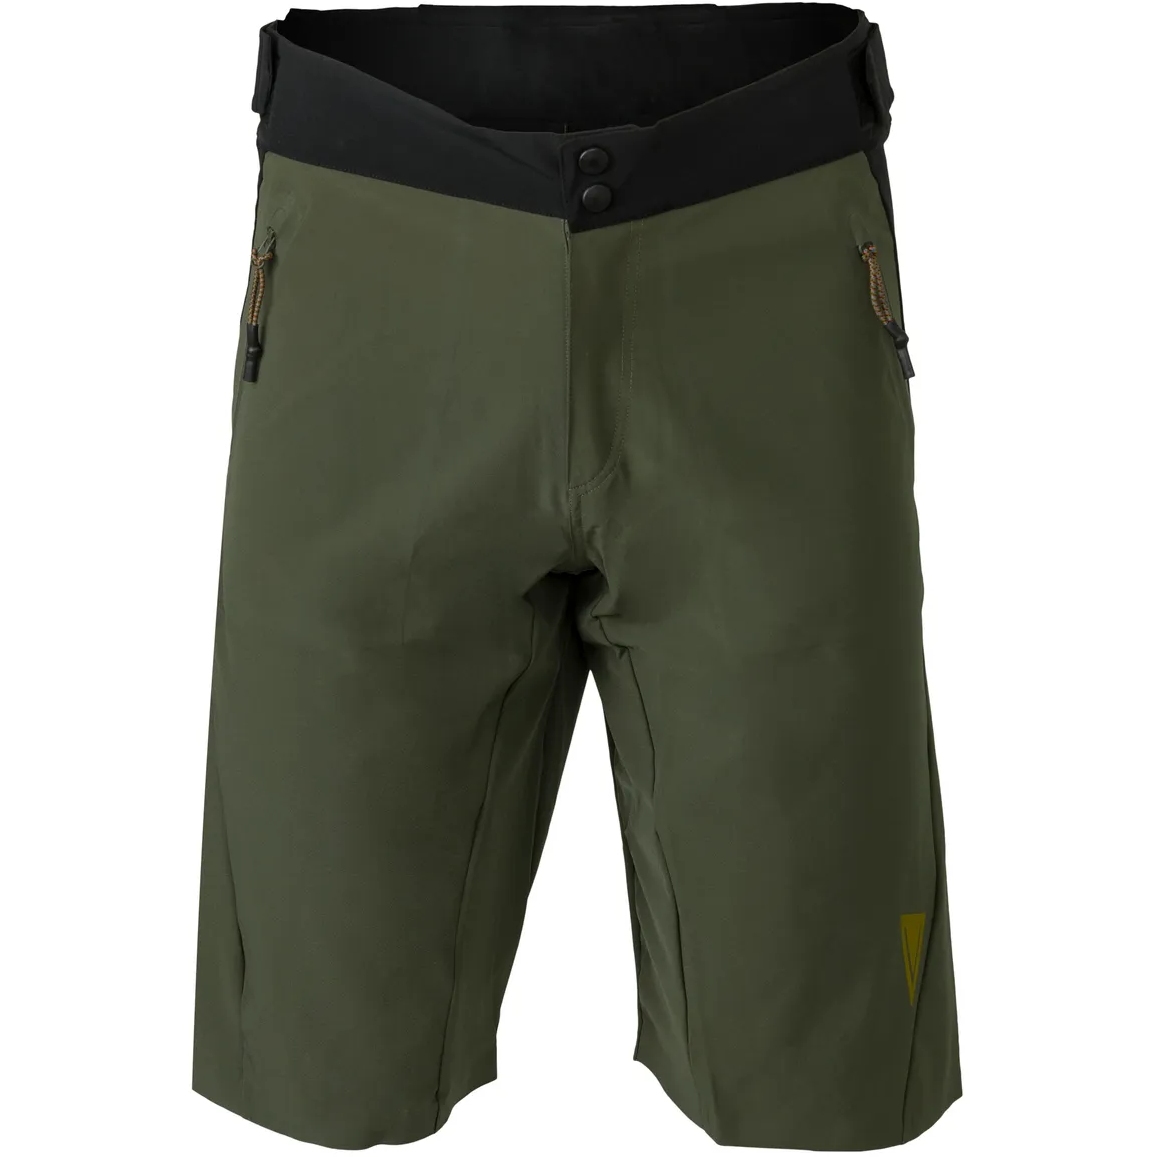 Image of AGU Venture MTB Summer Shorts - army green